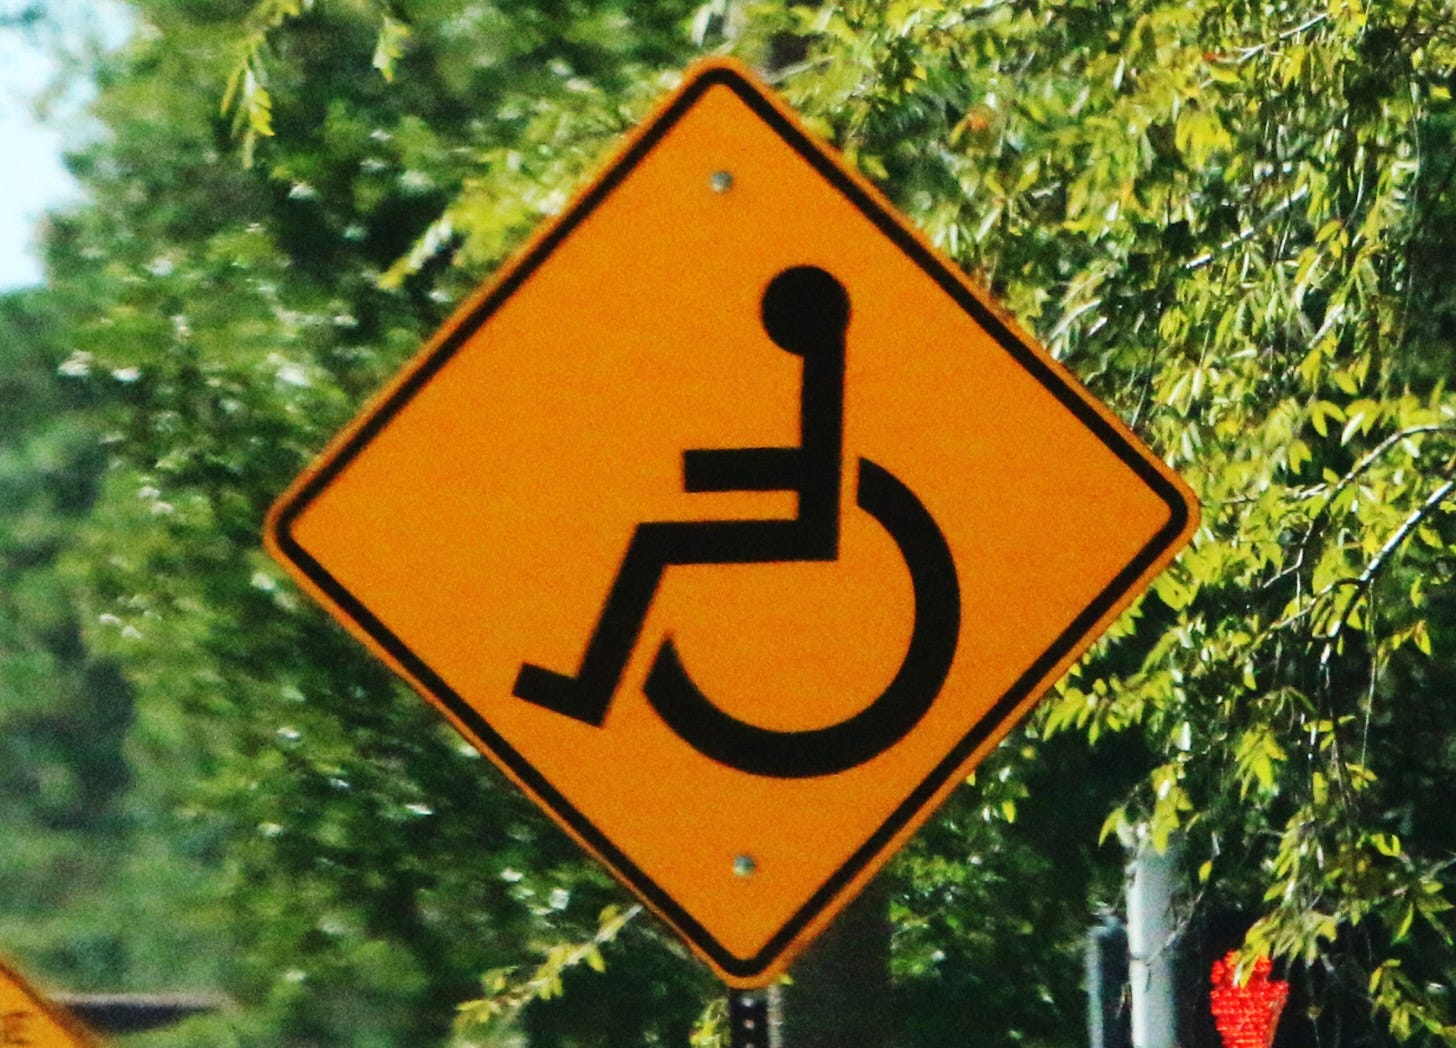 Wheelchair symbol on a yellow diamond traffic sign